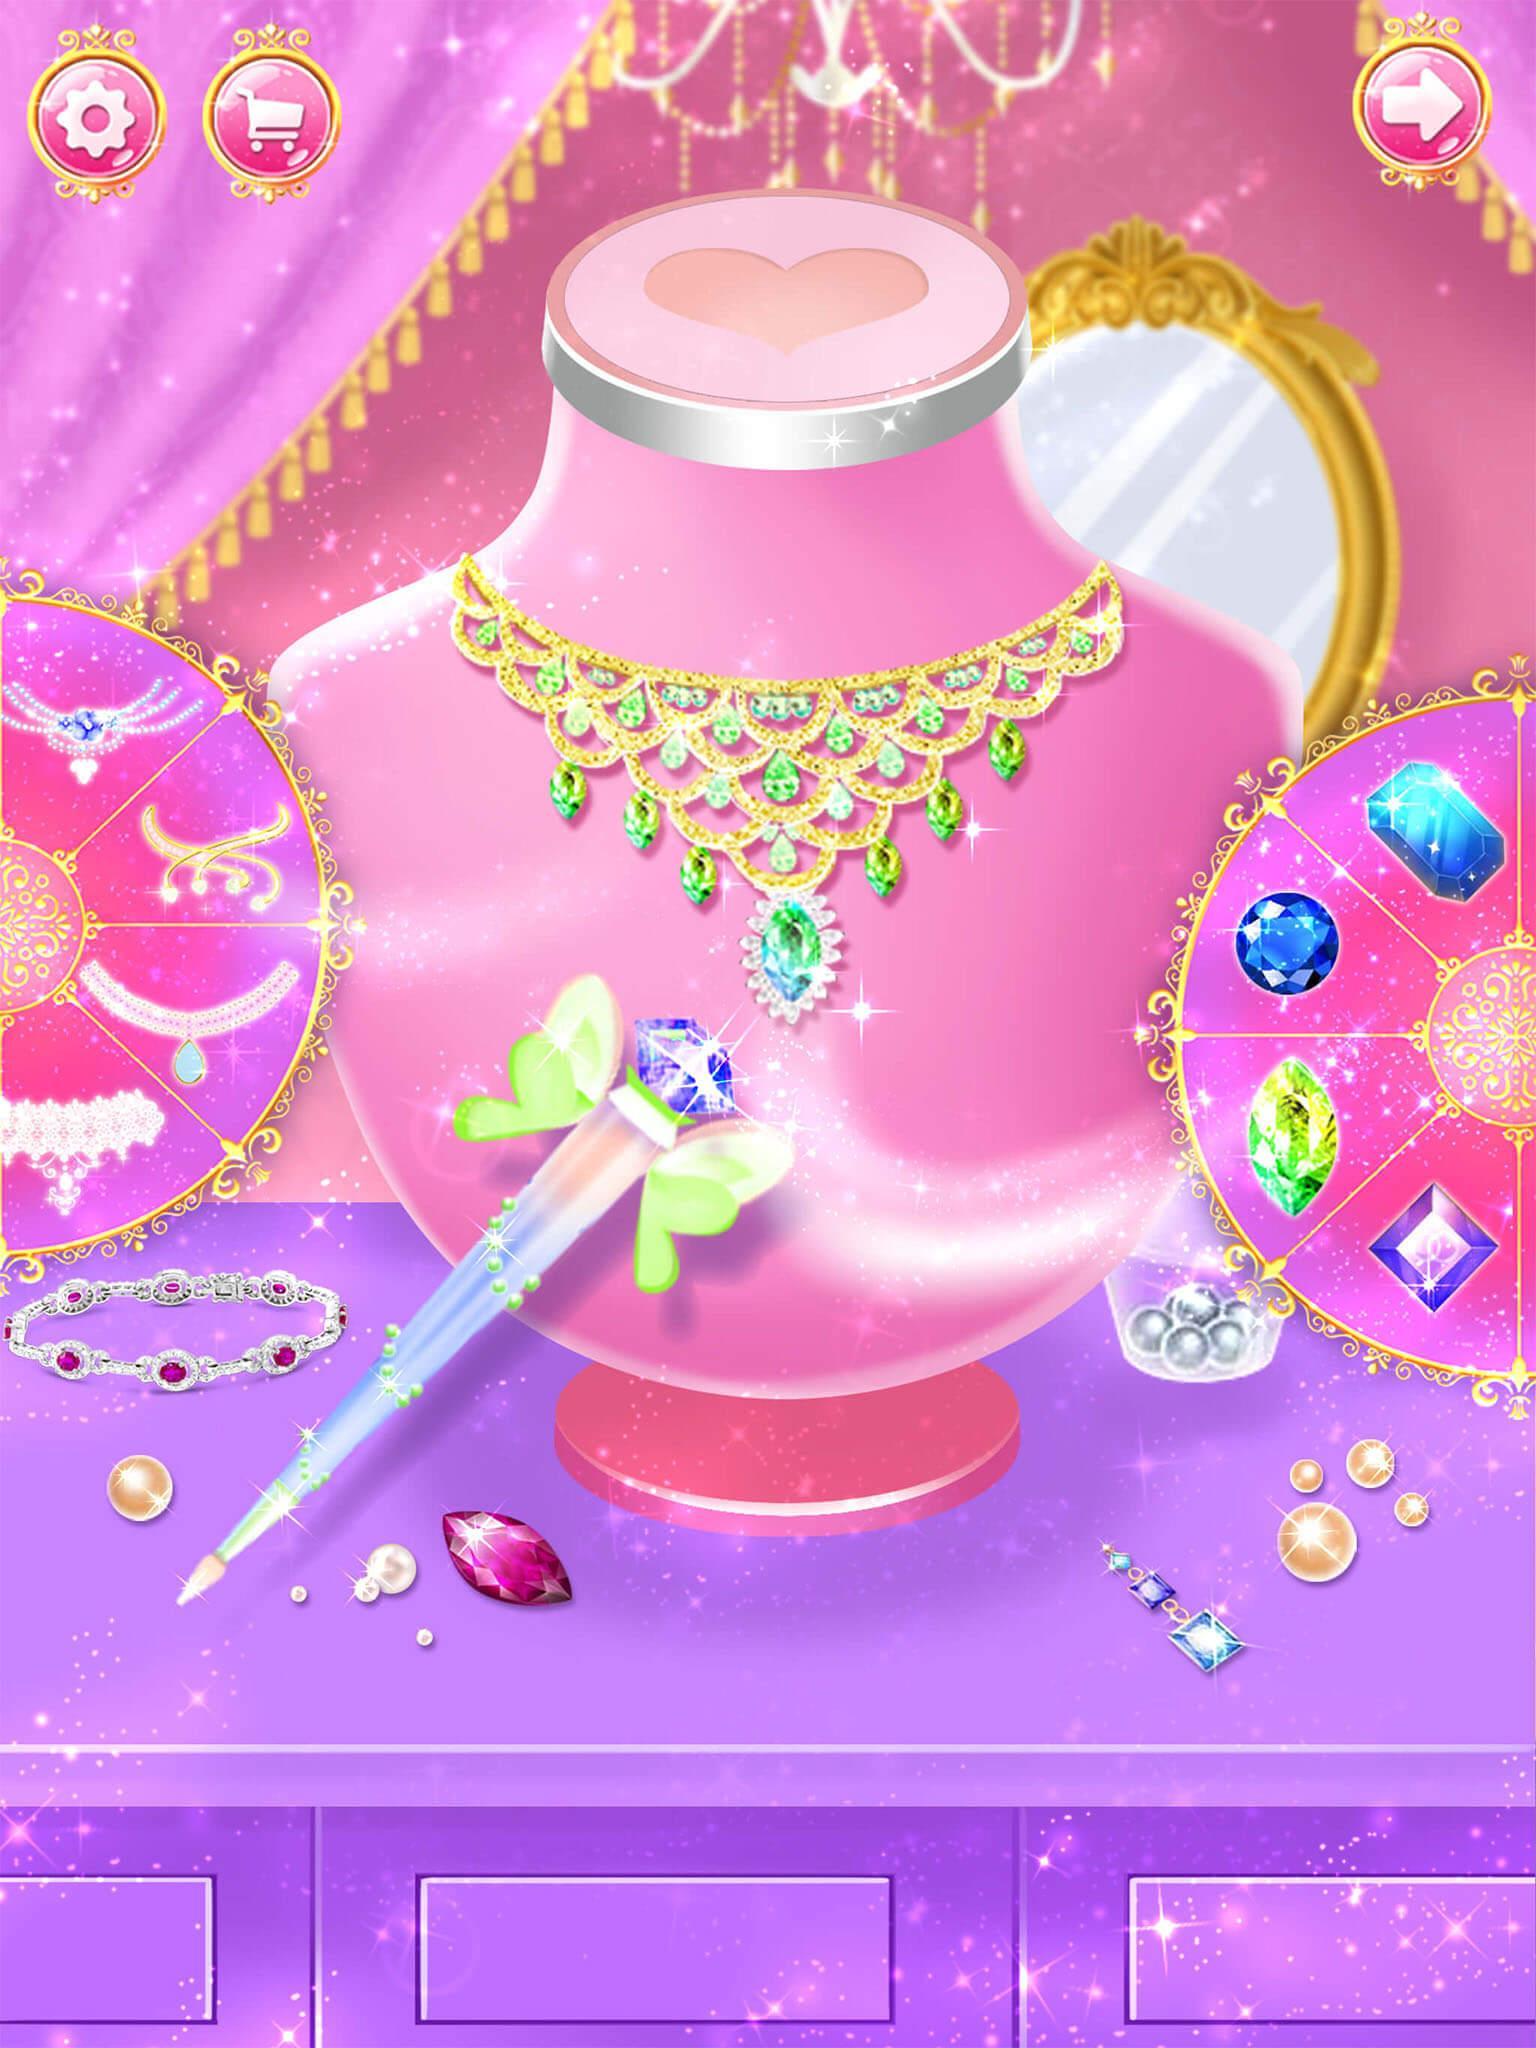 Princess dress up and makeover games 1.3.7 Screenshot 10